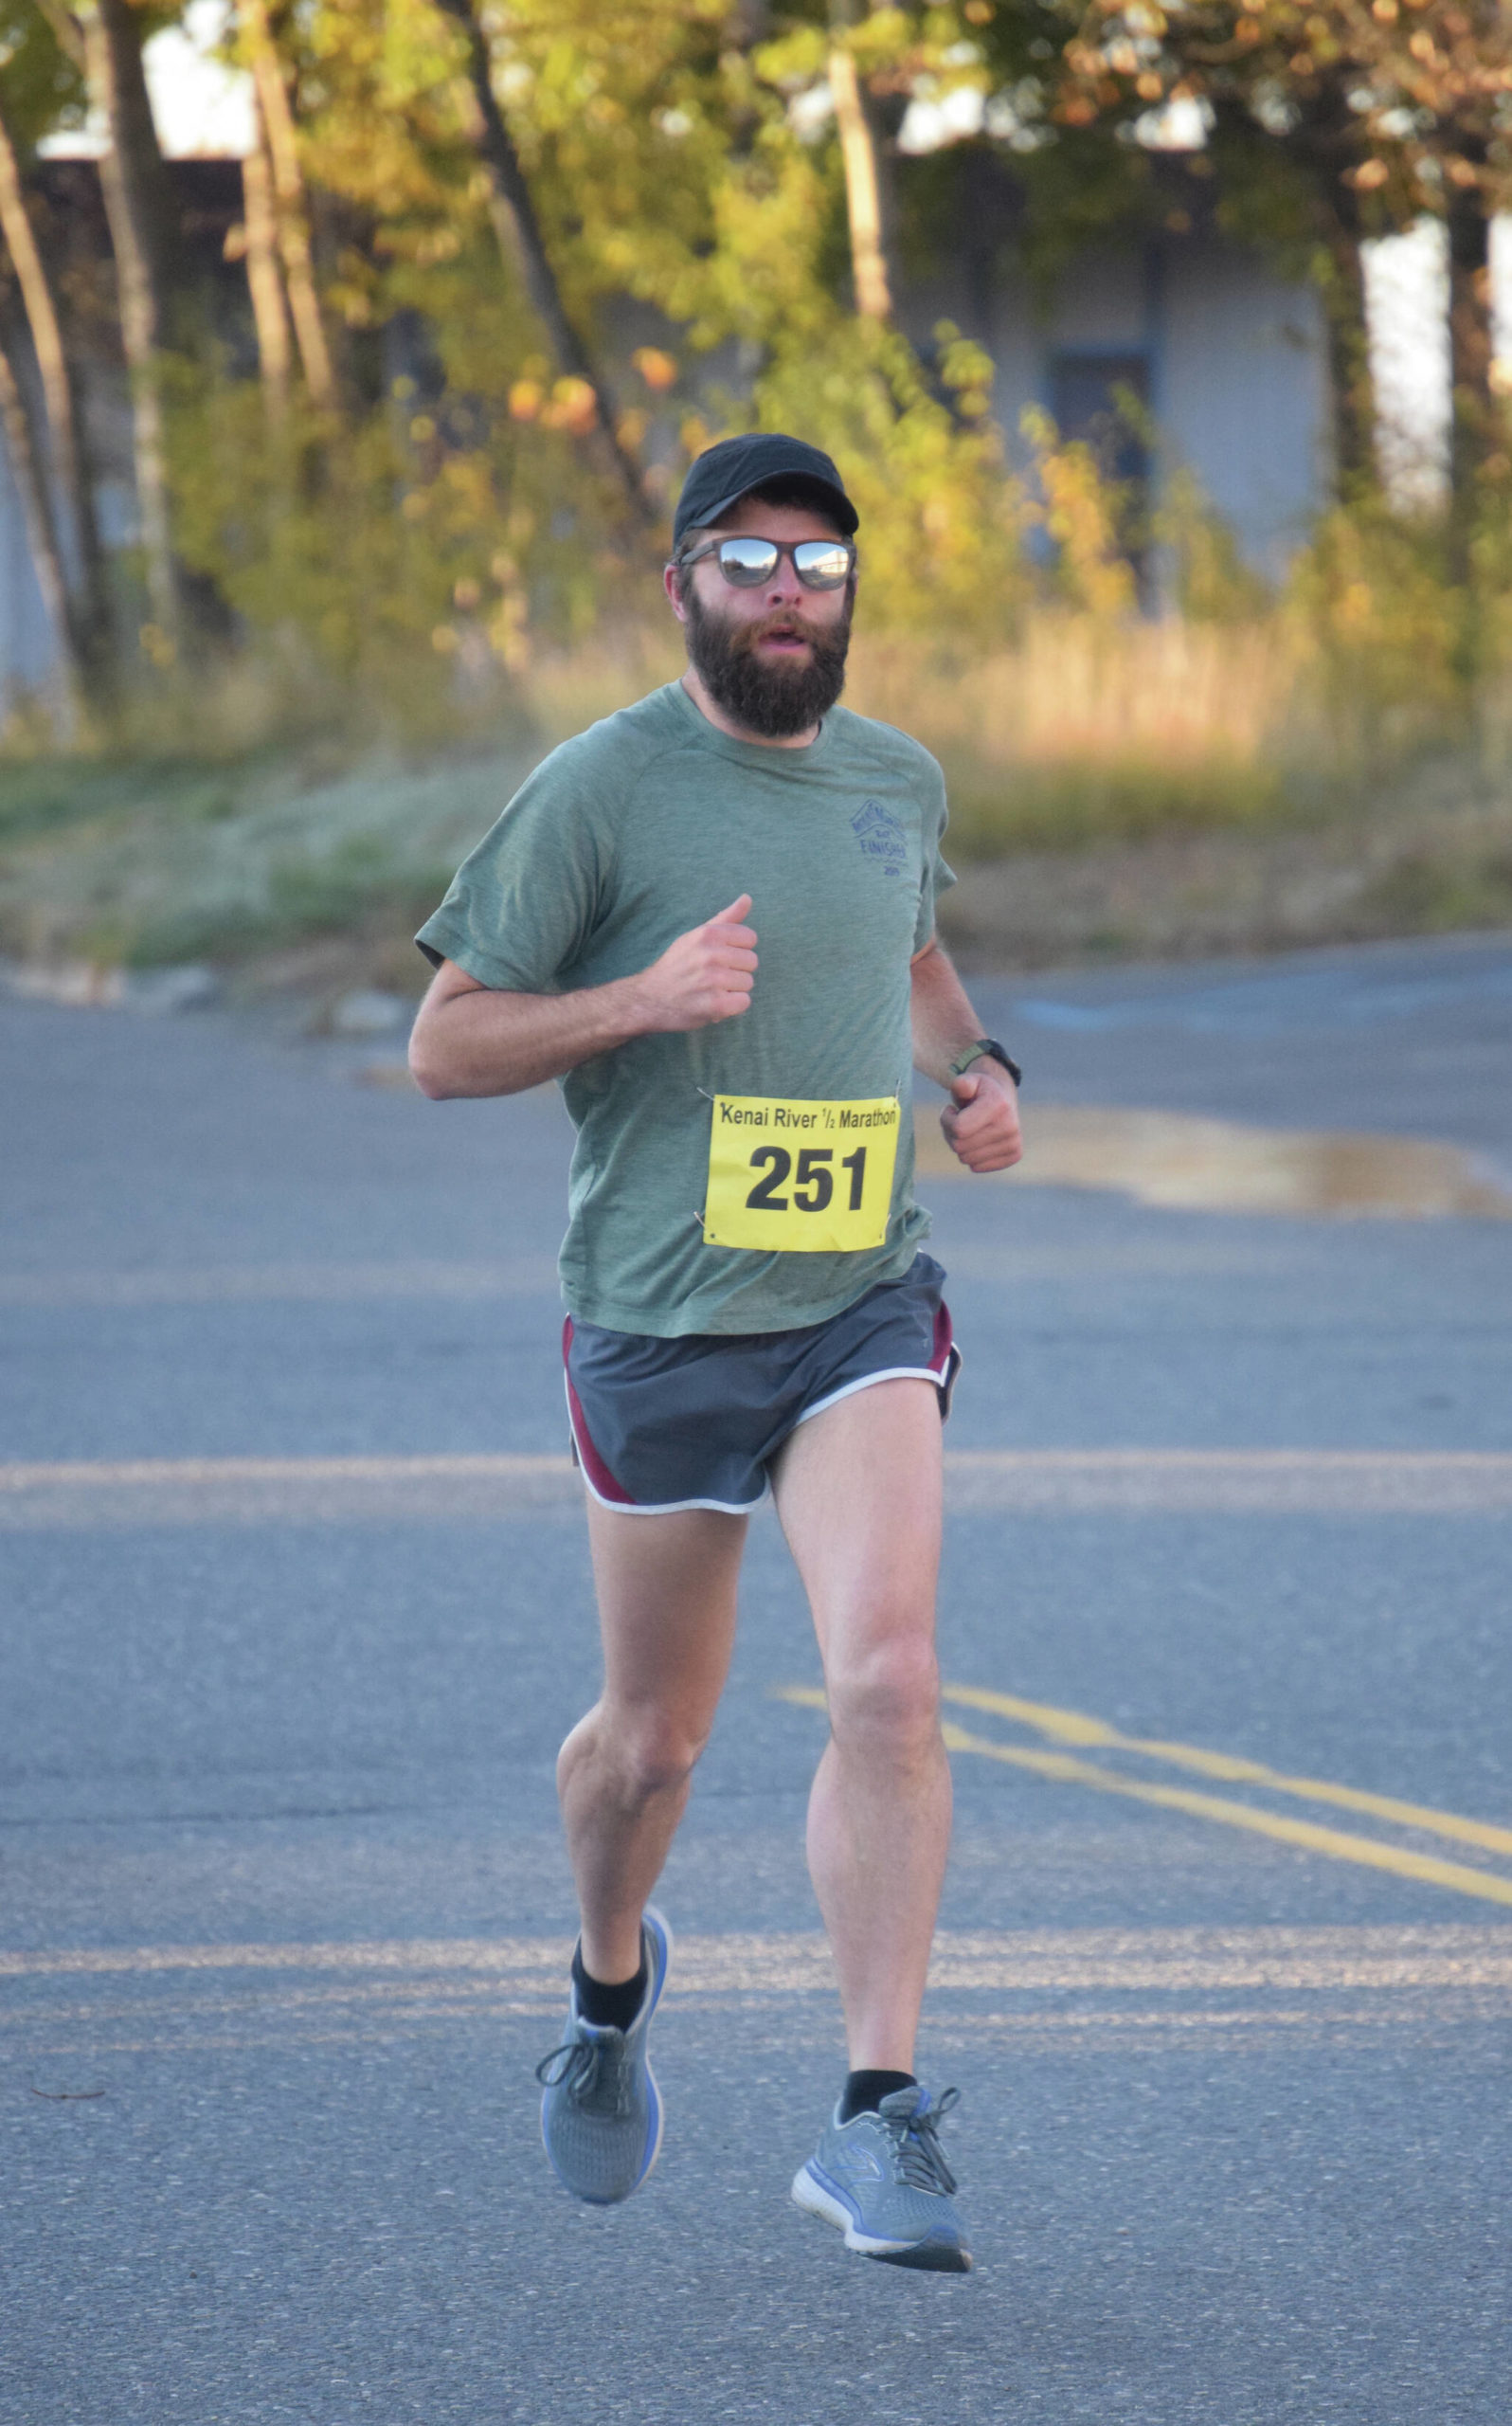 Men’s half marathon winner Patrick Lewis runs through Kenai, Alaska, during the Kenai River Marathon on Sunday, Sept. 26, 2021. (Photo by Jeff Helminiak/Peninsula Clarion)